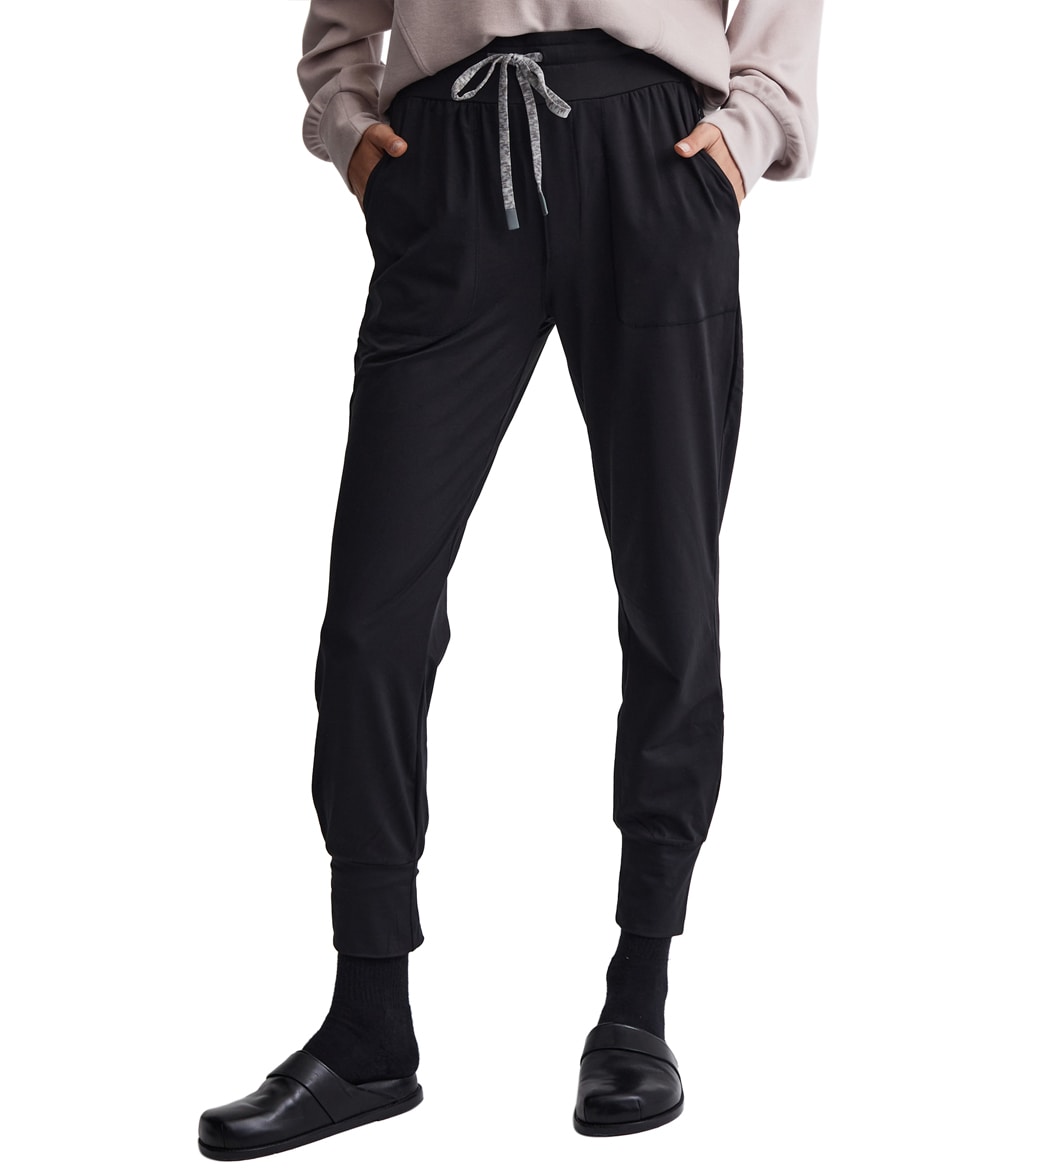 Varley Parkhurst Jogger Pantss - Black Xs Size X-Small - Swimoutlet.com